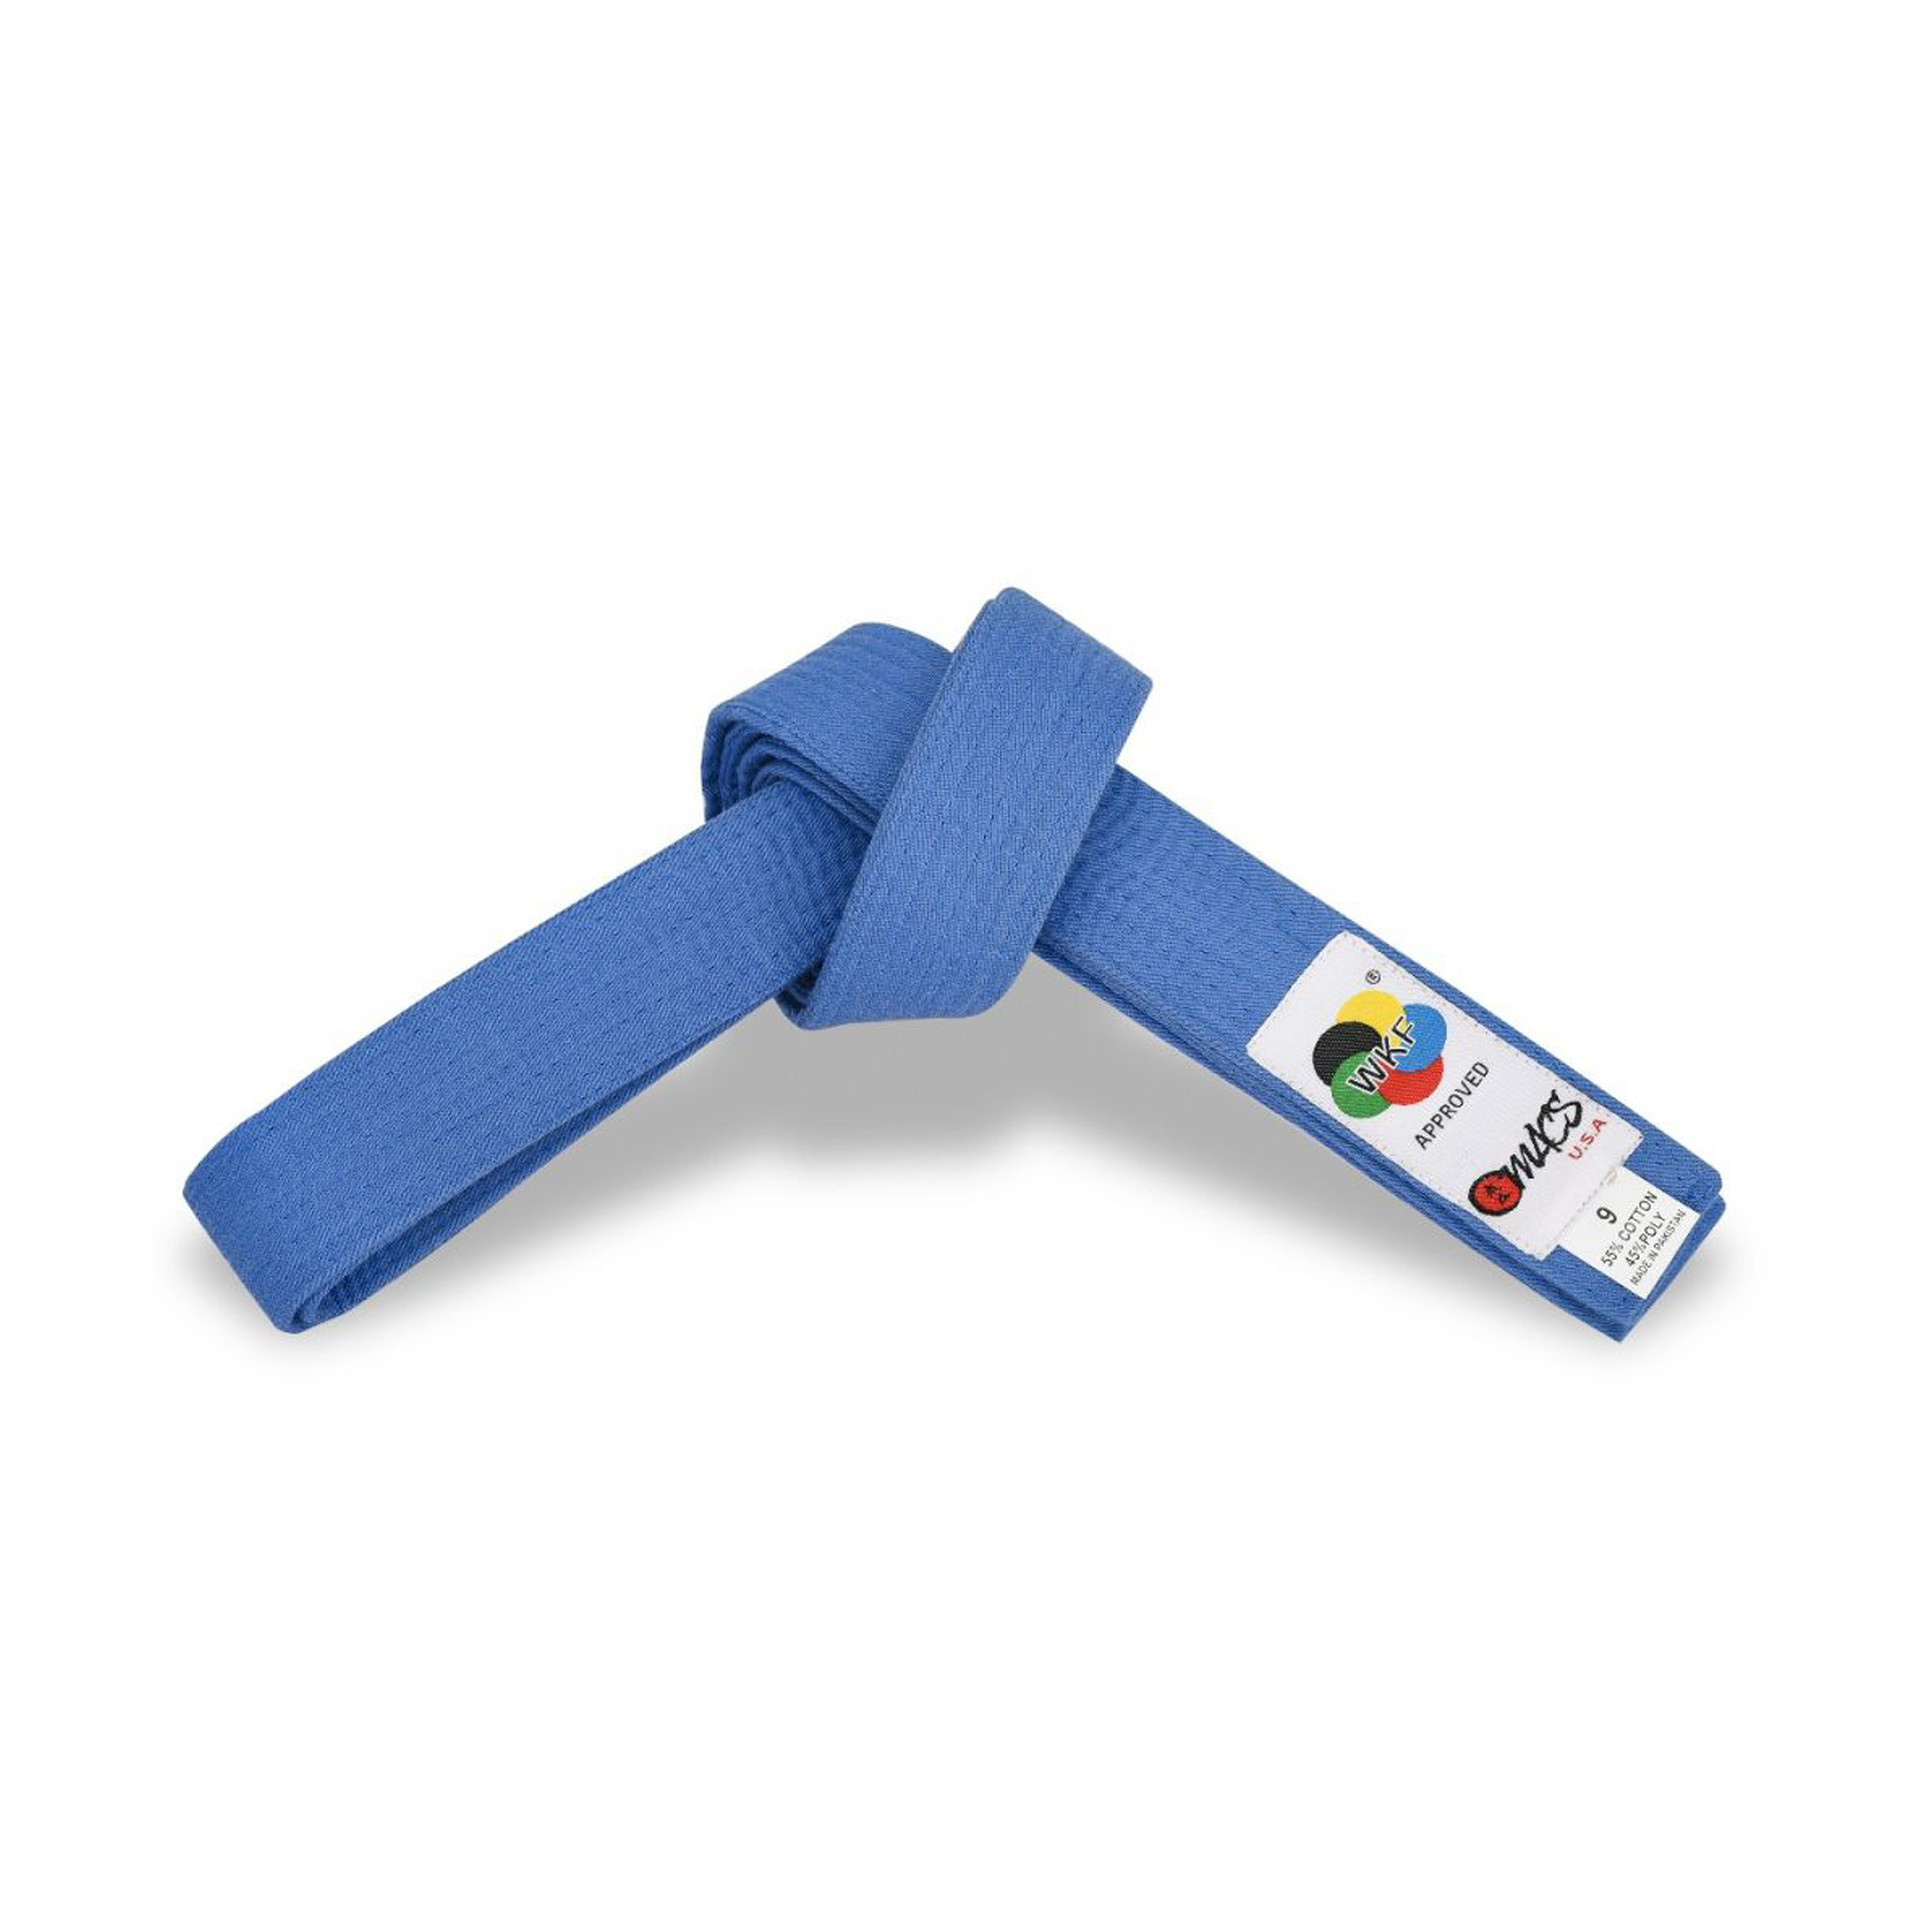 Cinturón De Karate Wkf Boxpt Azul -  300 Cm - azul - 